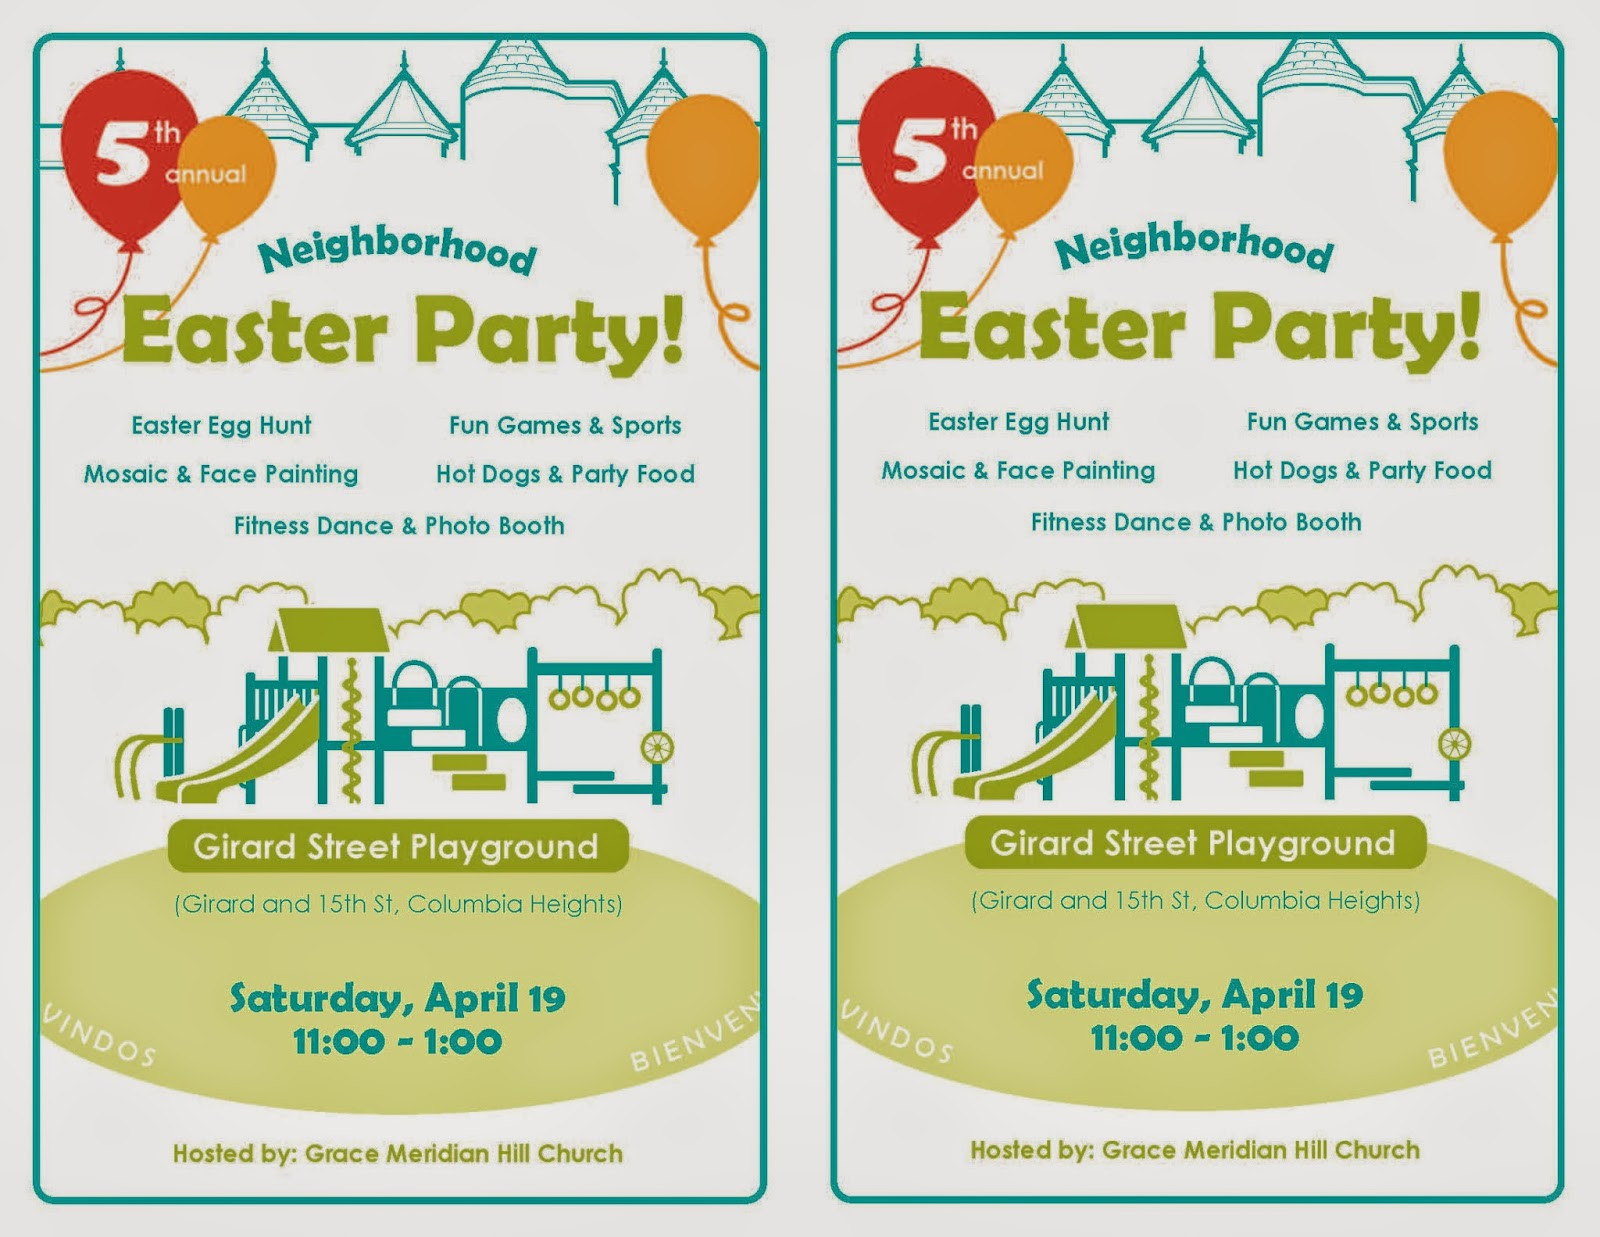 Easter Church Party Ideas
 New Columbia Heights Grace Church hosting neighborhood